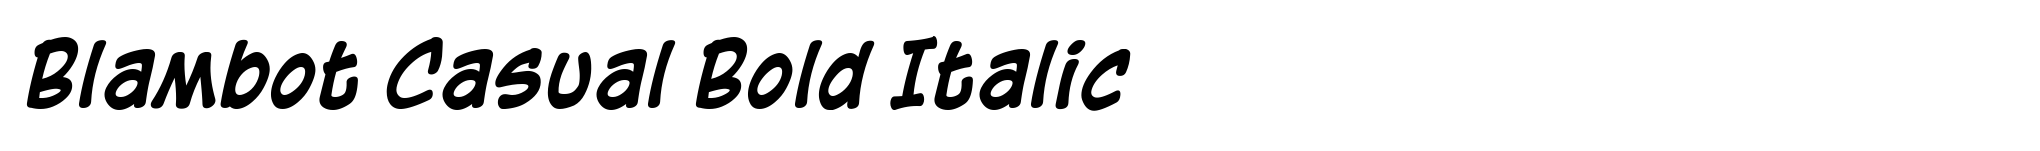 Blambot Casual Bold Italic image